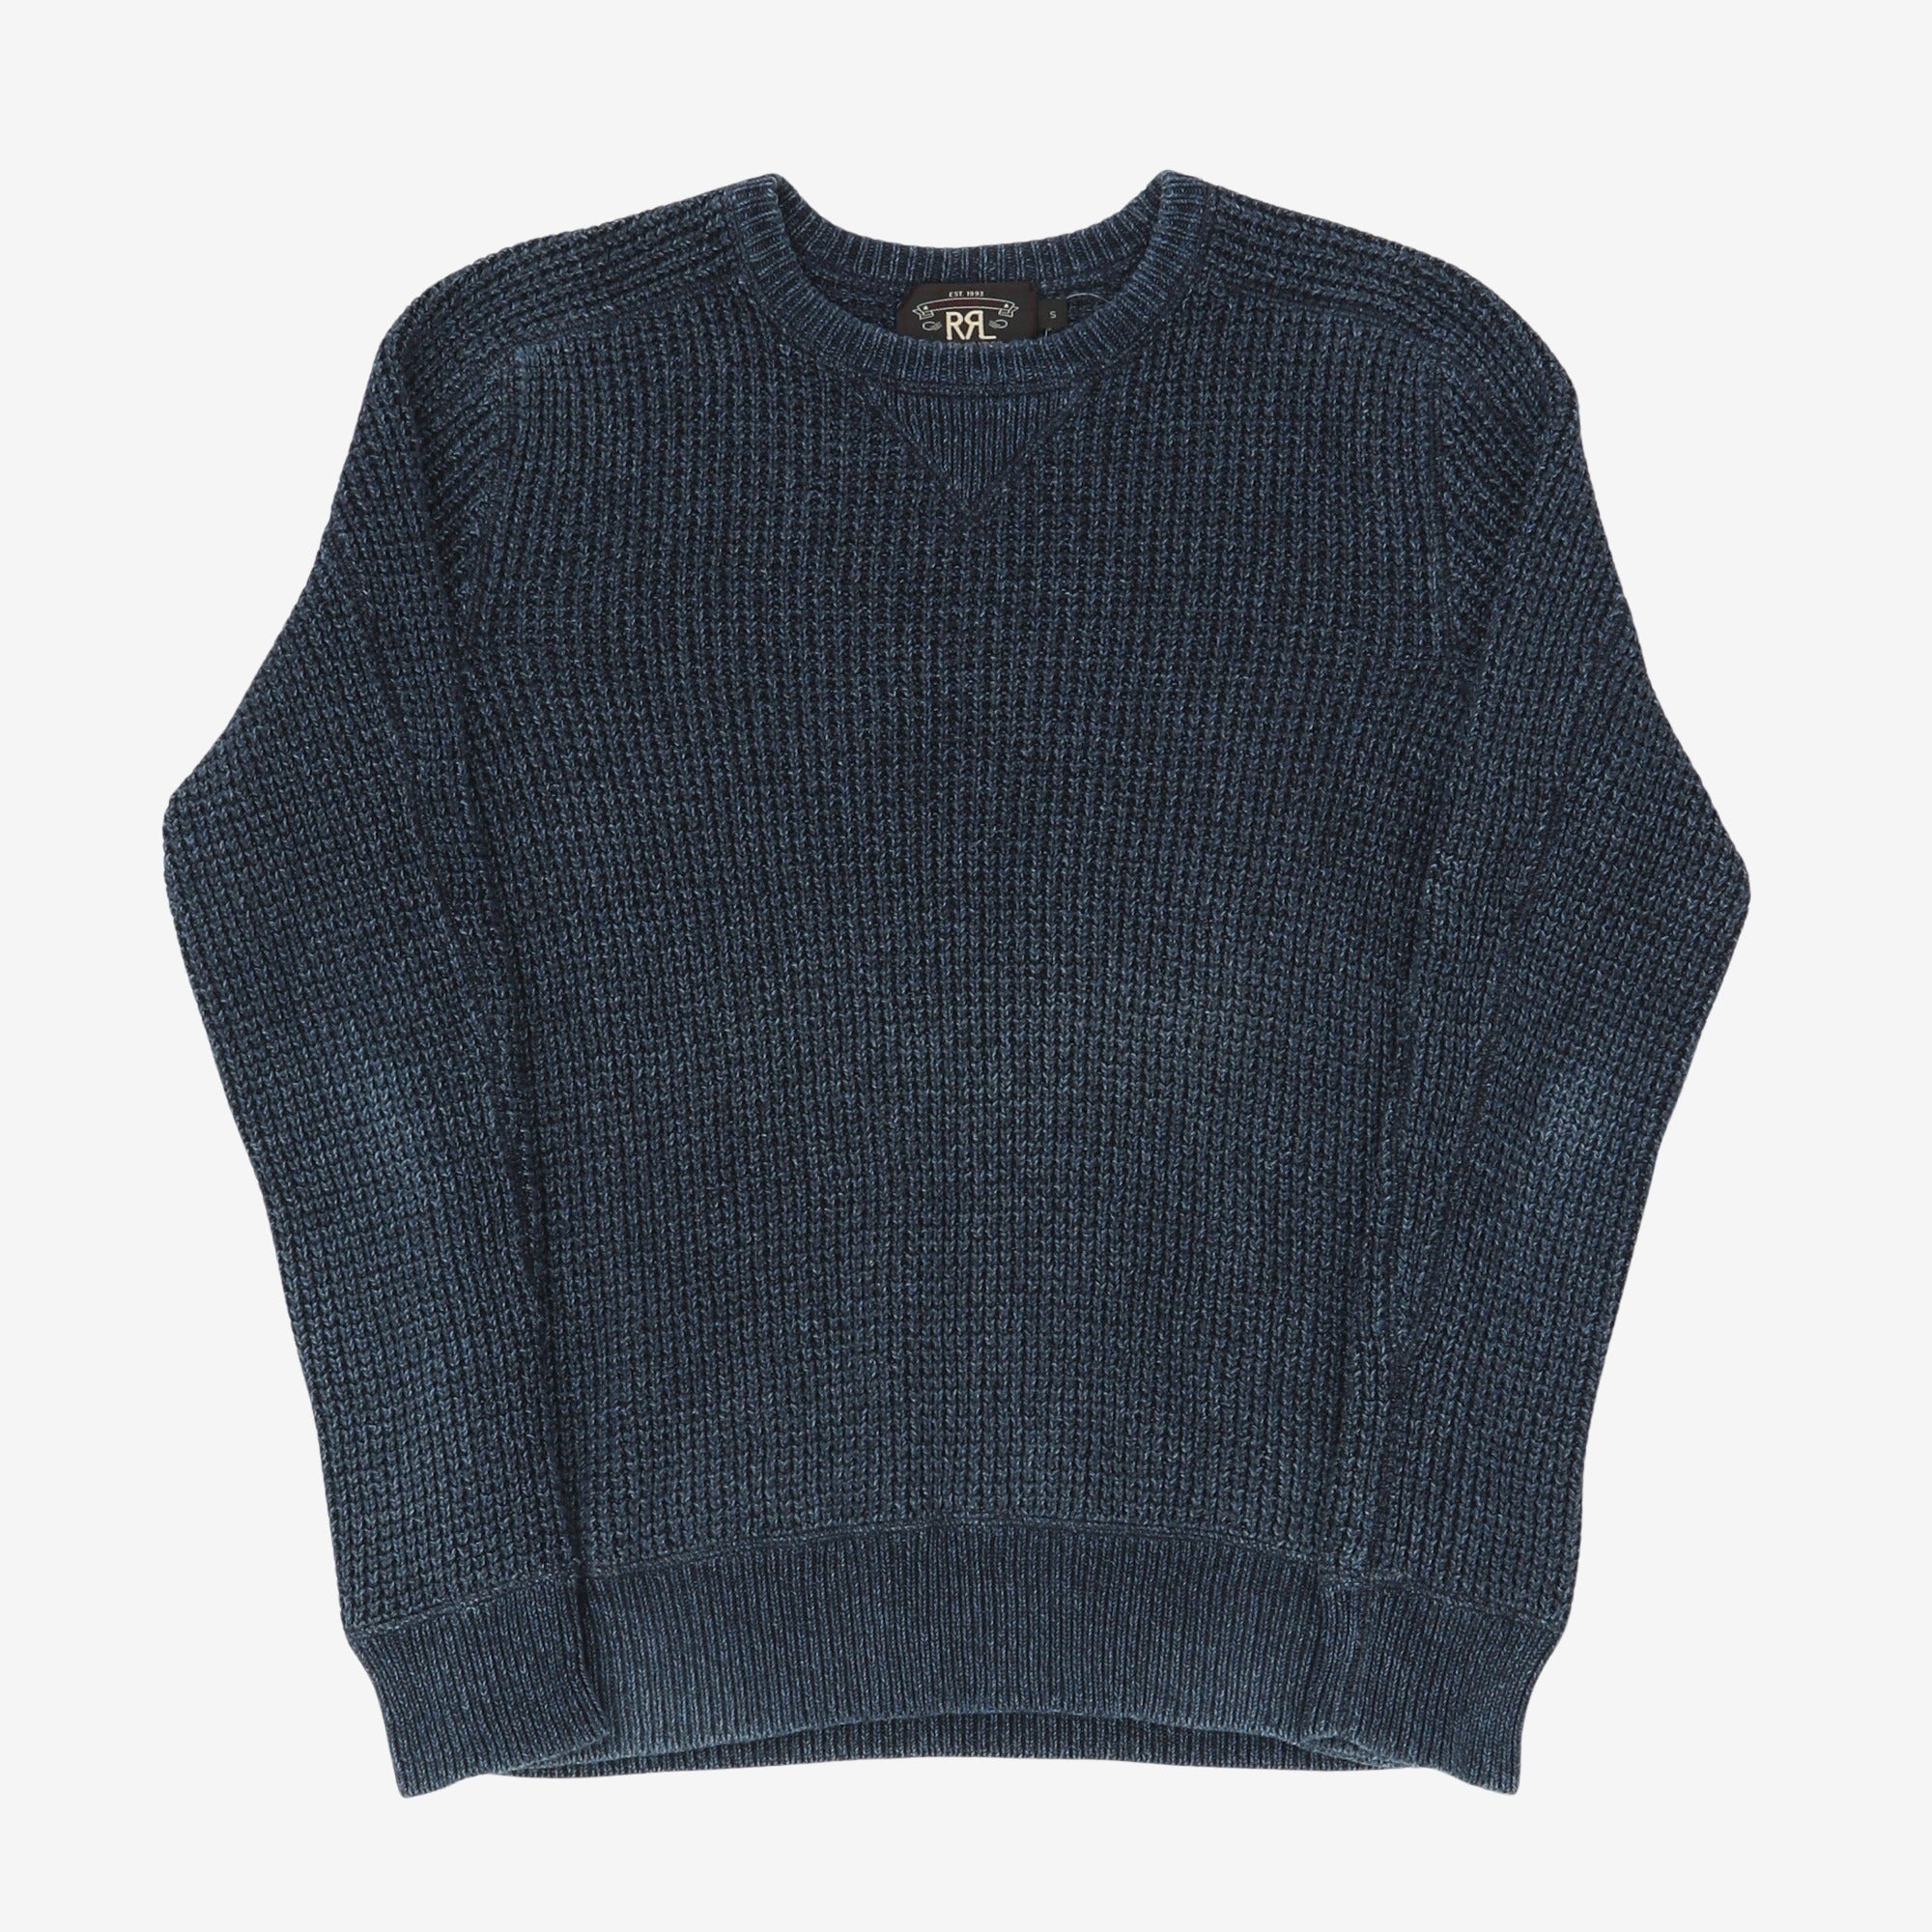 Crew Neck knit Sweater